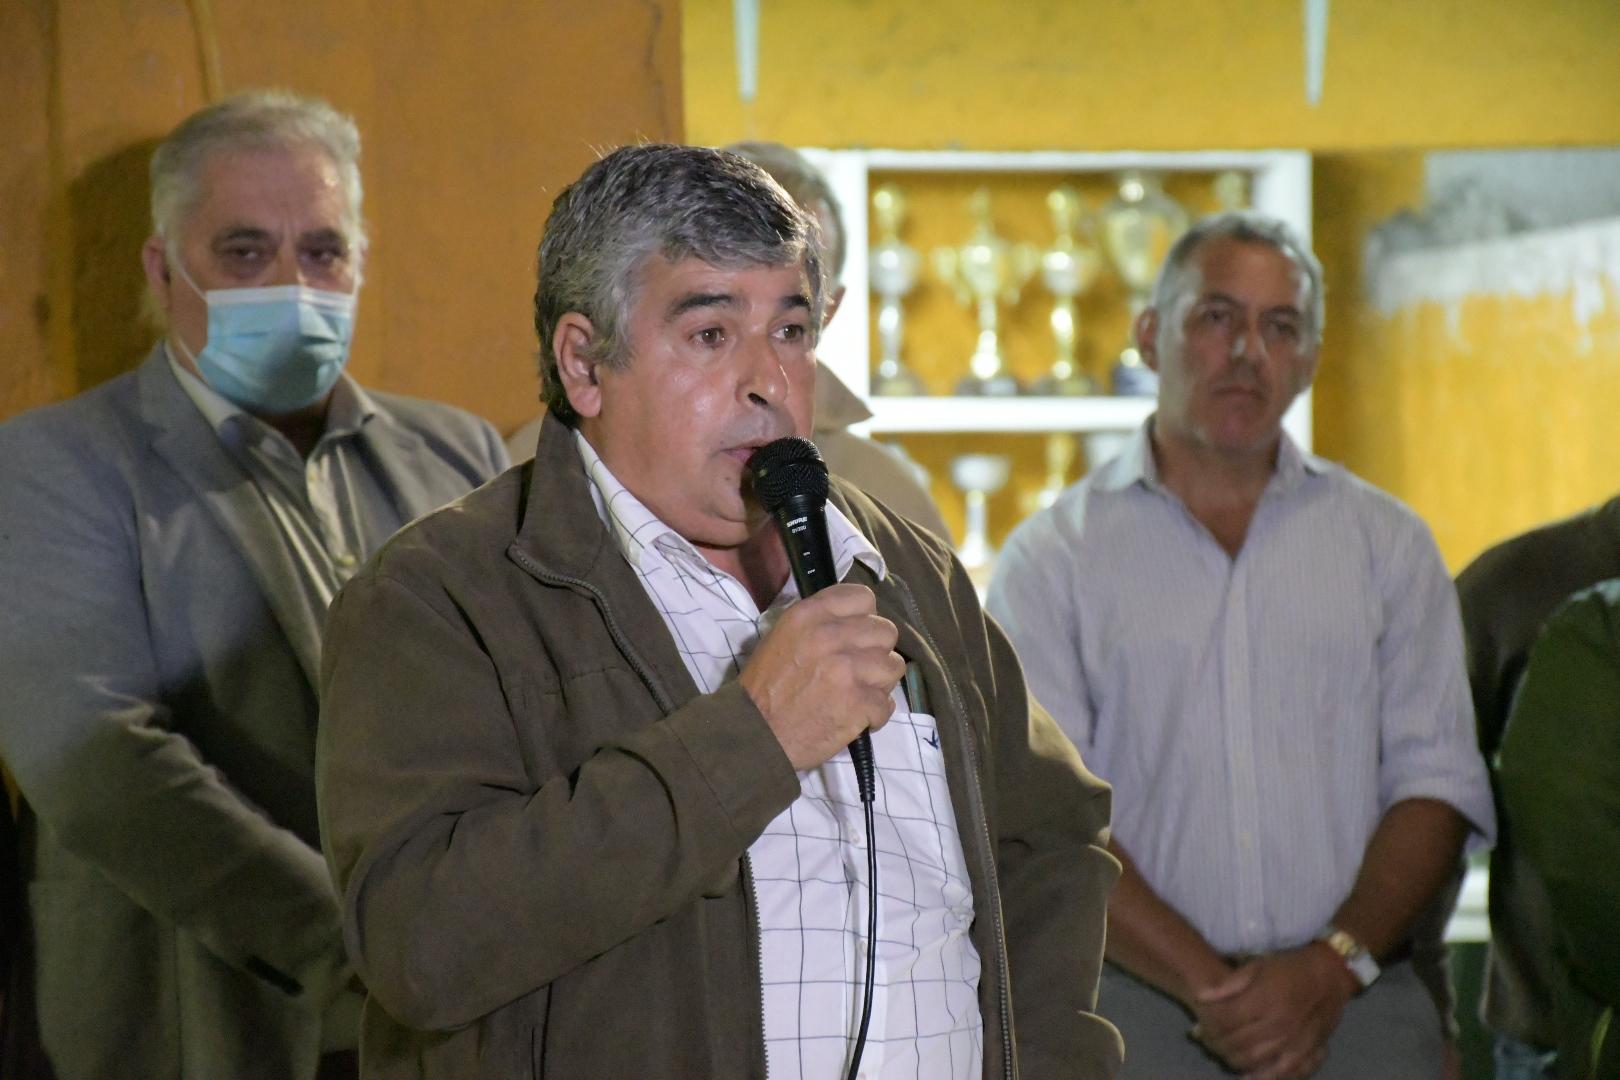 Alcalde de Atlántida, Gustavo González